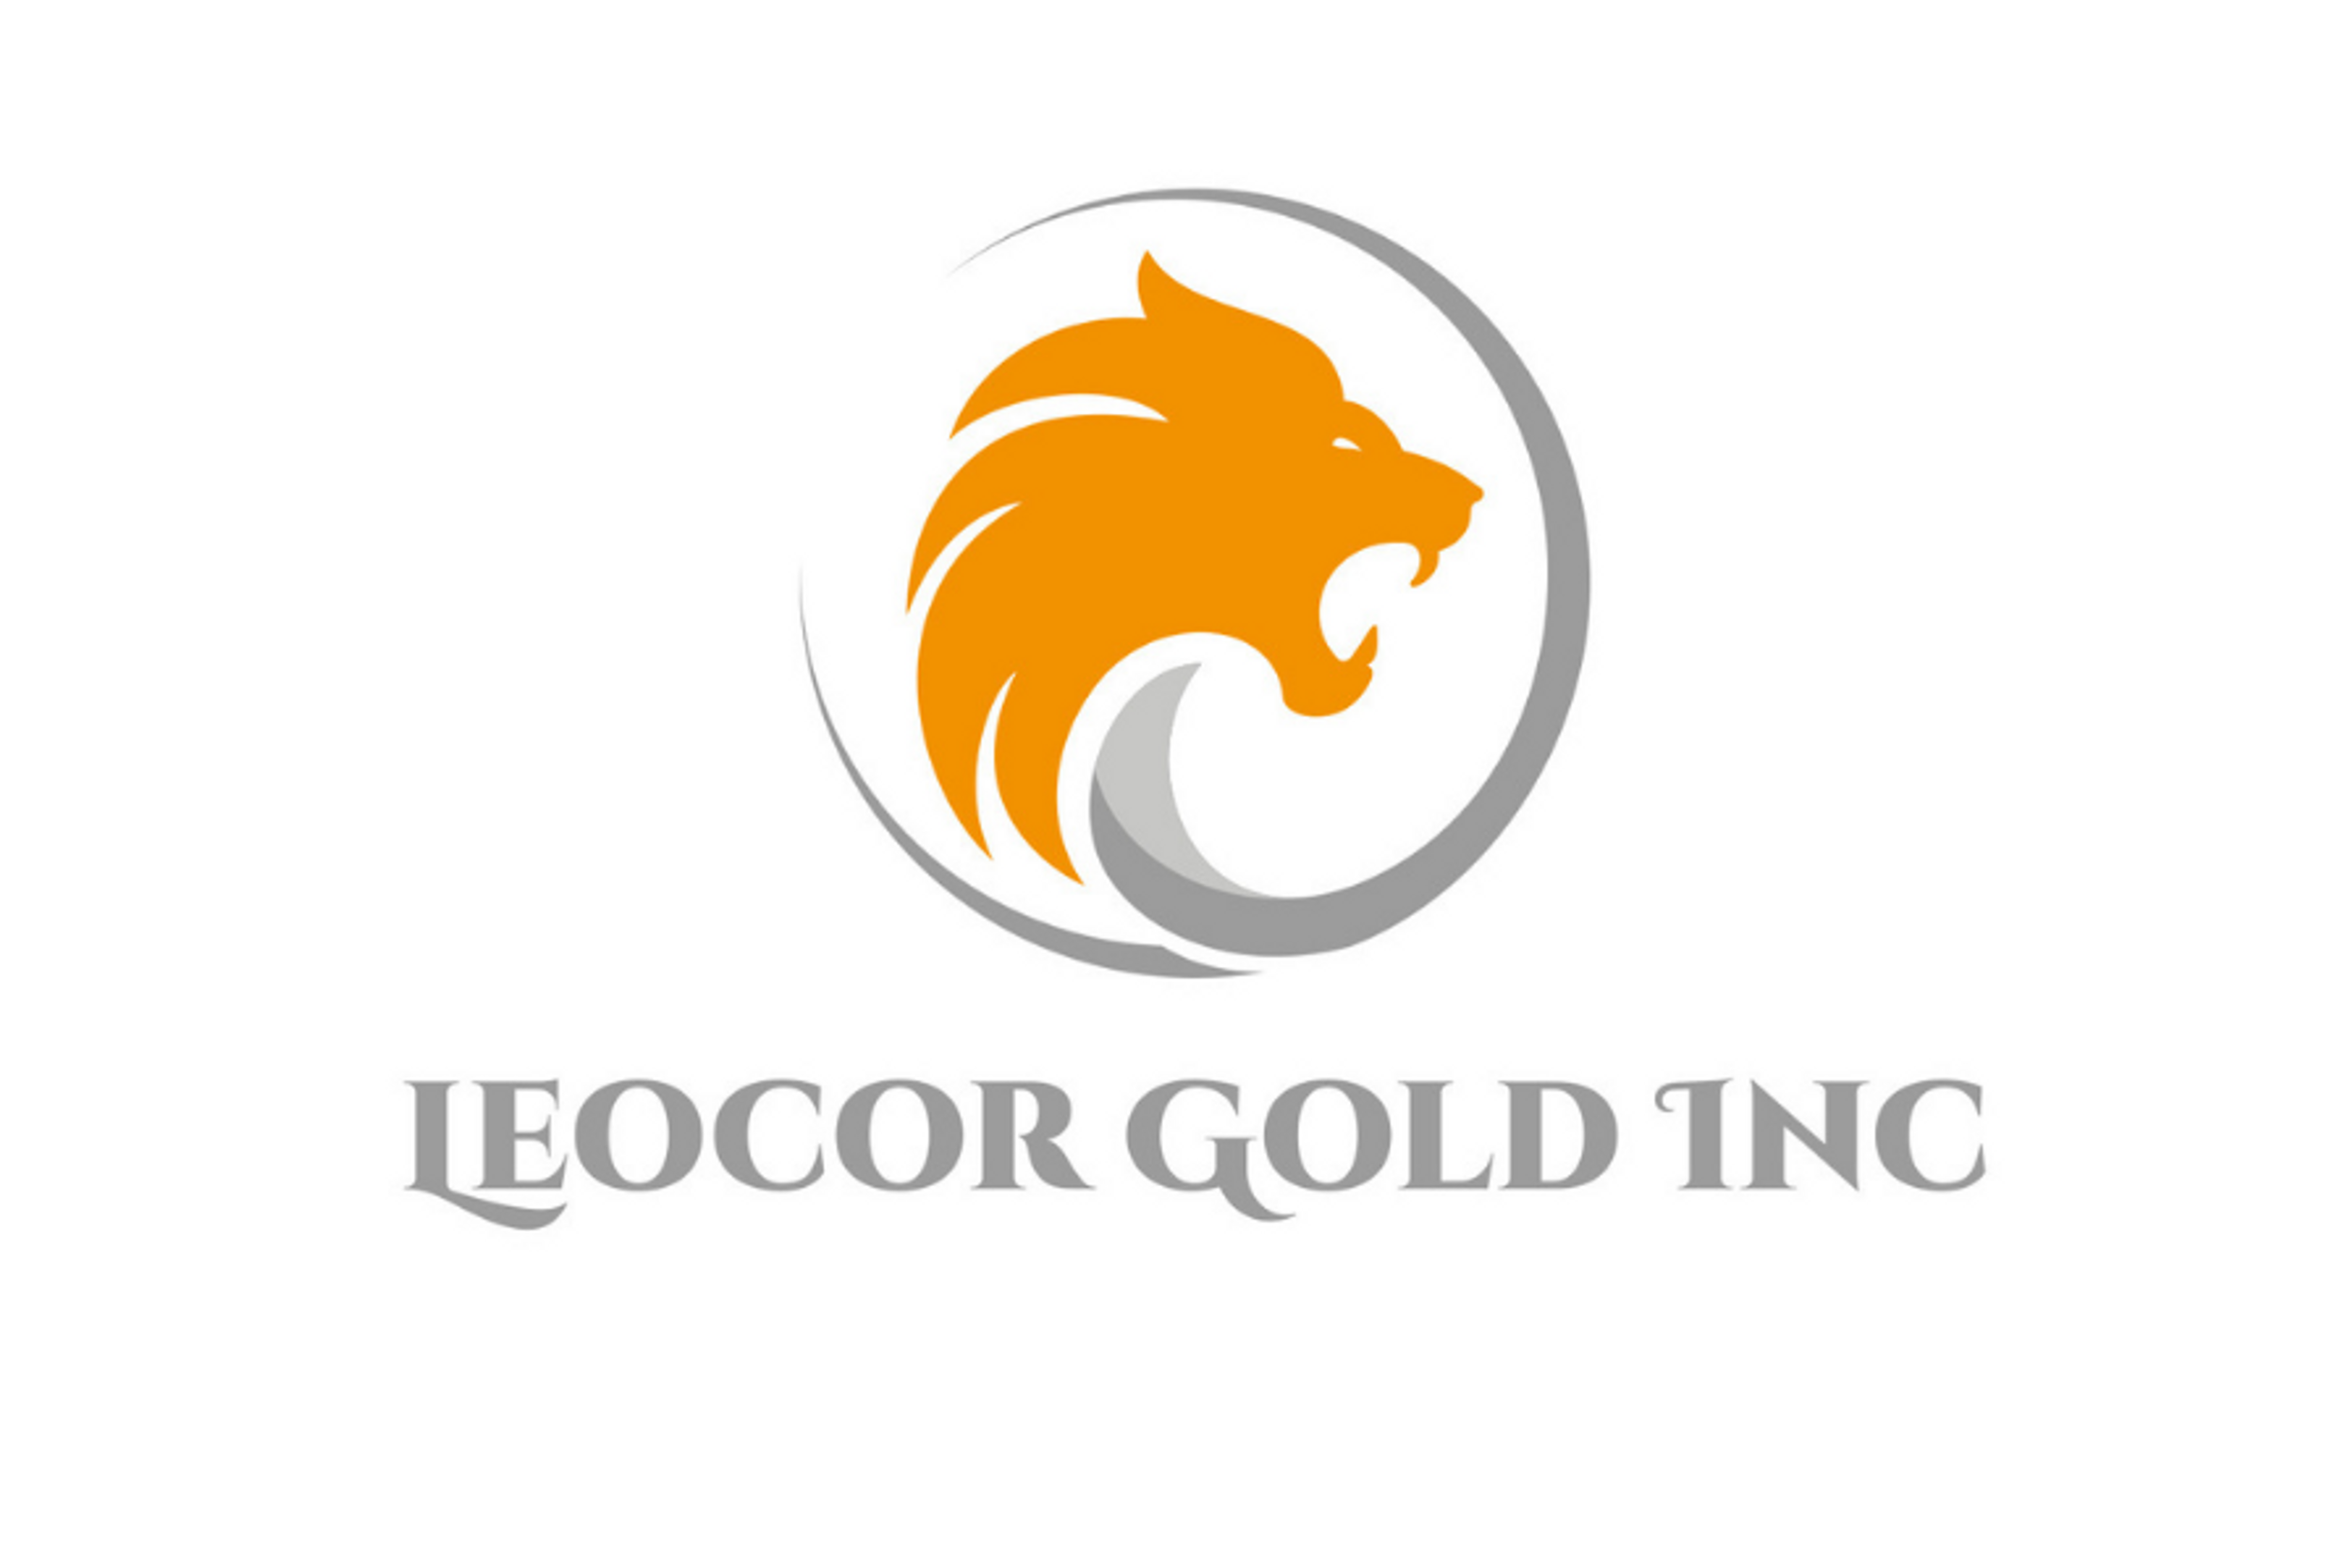 Leocor Gold